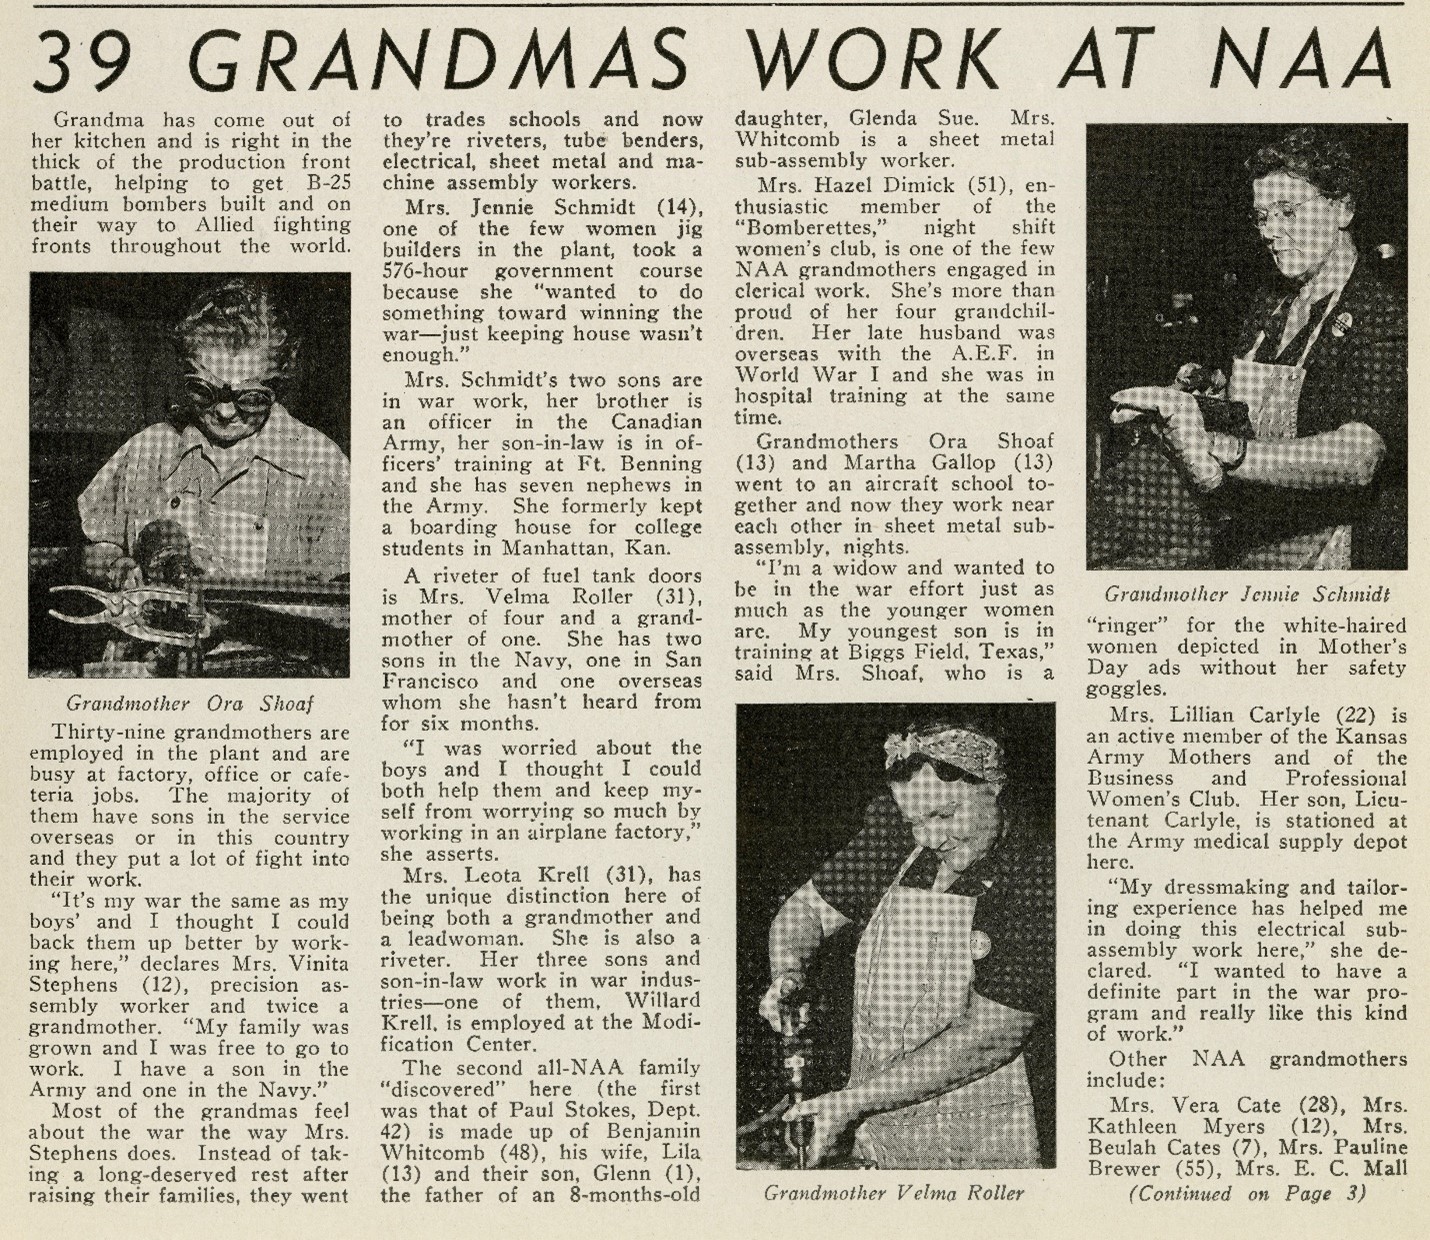 North Ameri-Kansan magazine, November 7, 1942. NORTH AMERICAN AVIATION COLLECTION (SC169)